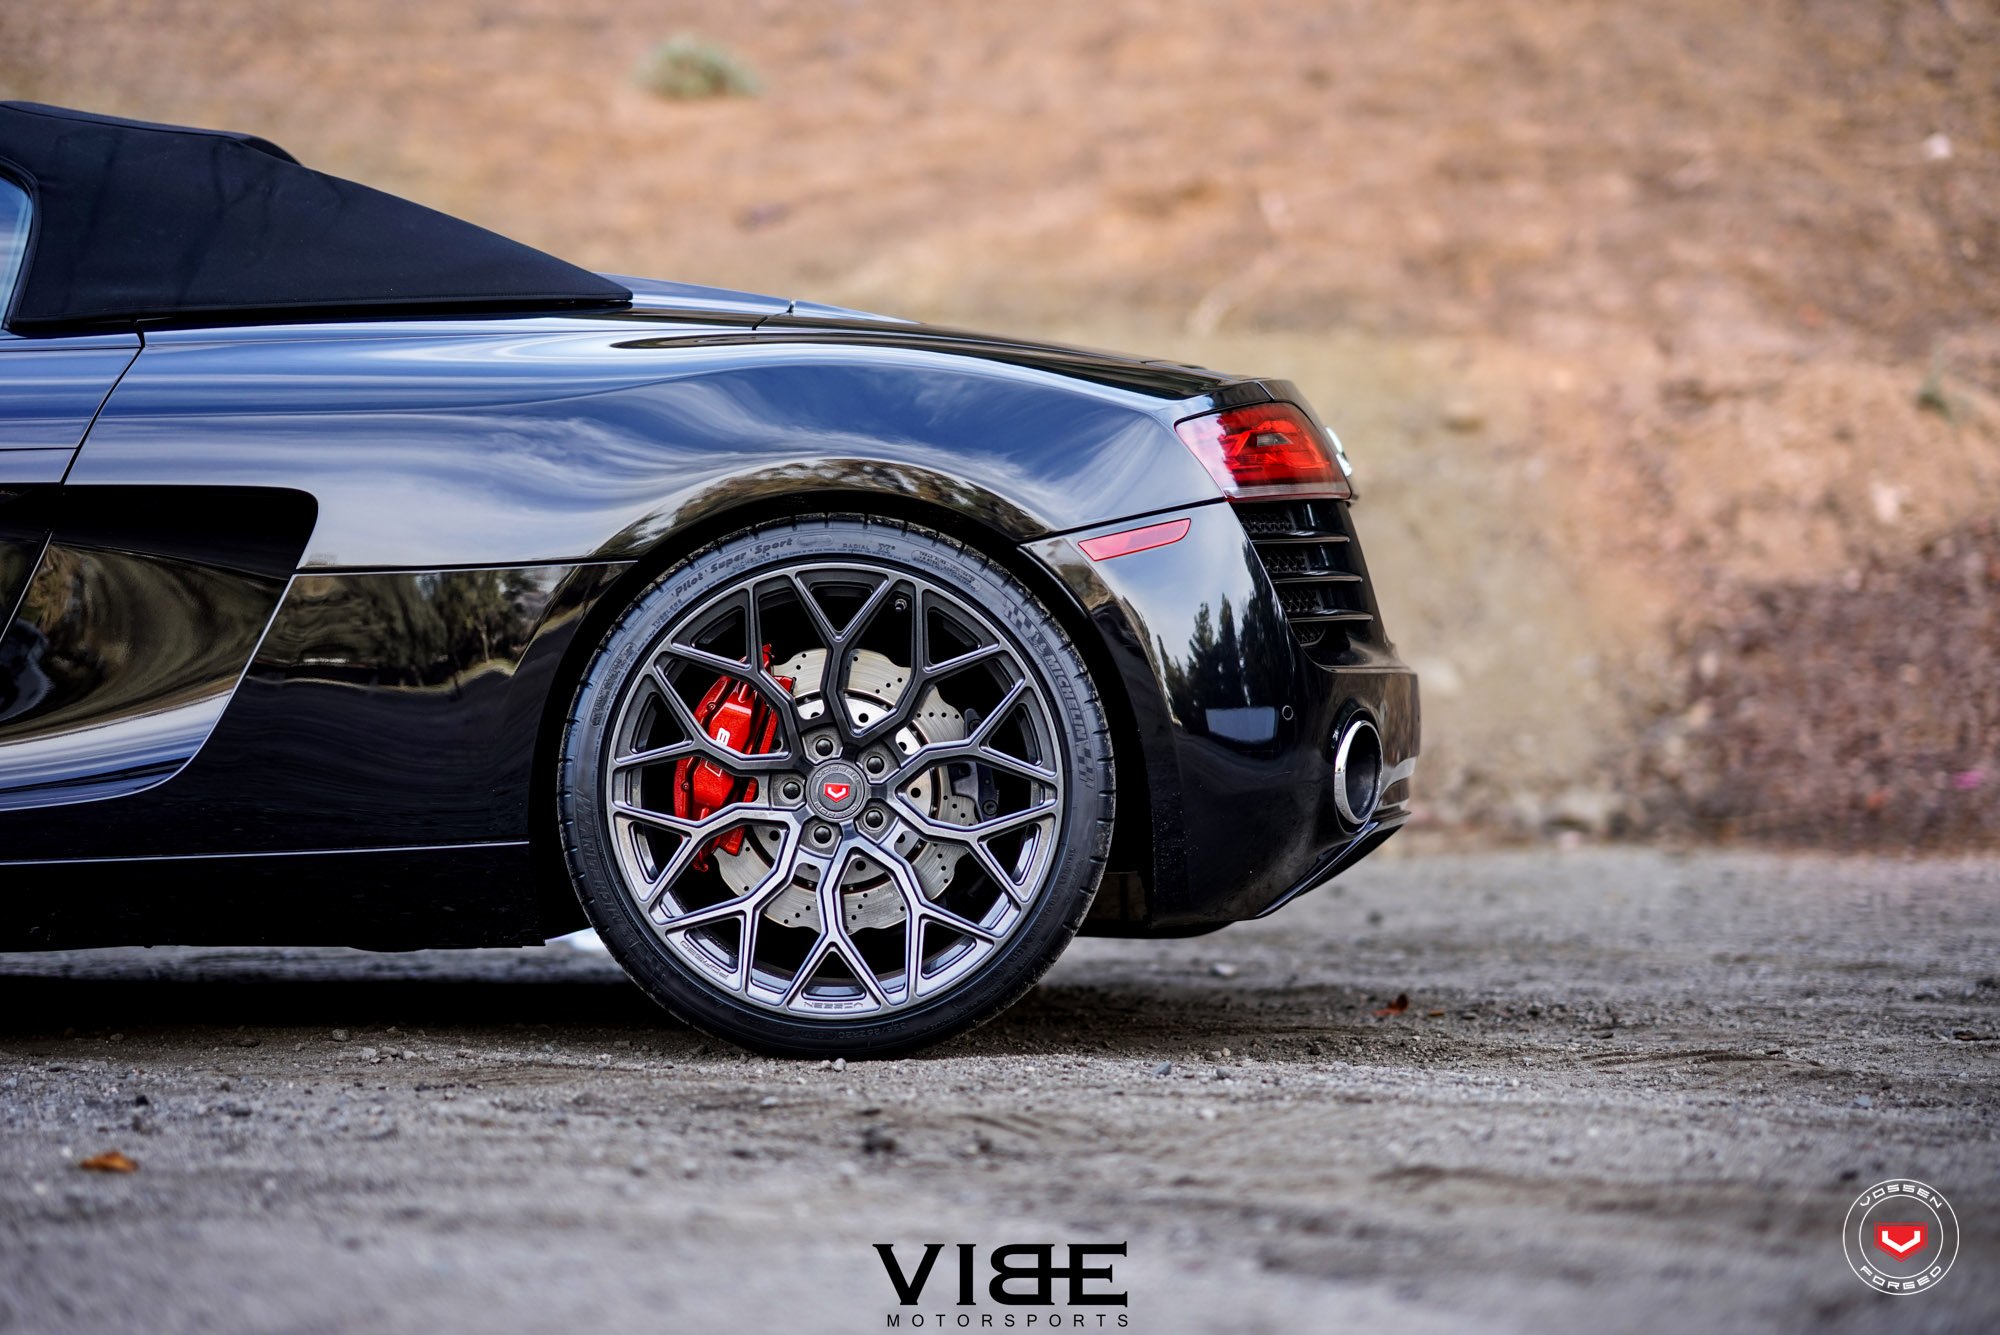 Custom Black Audi R8 on Michelin Tires - Photo by Vossen